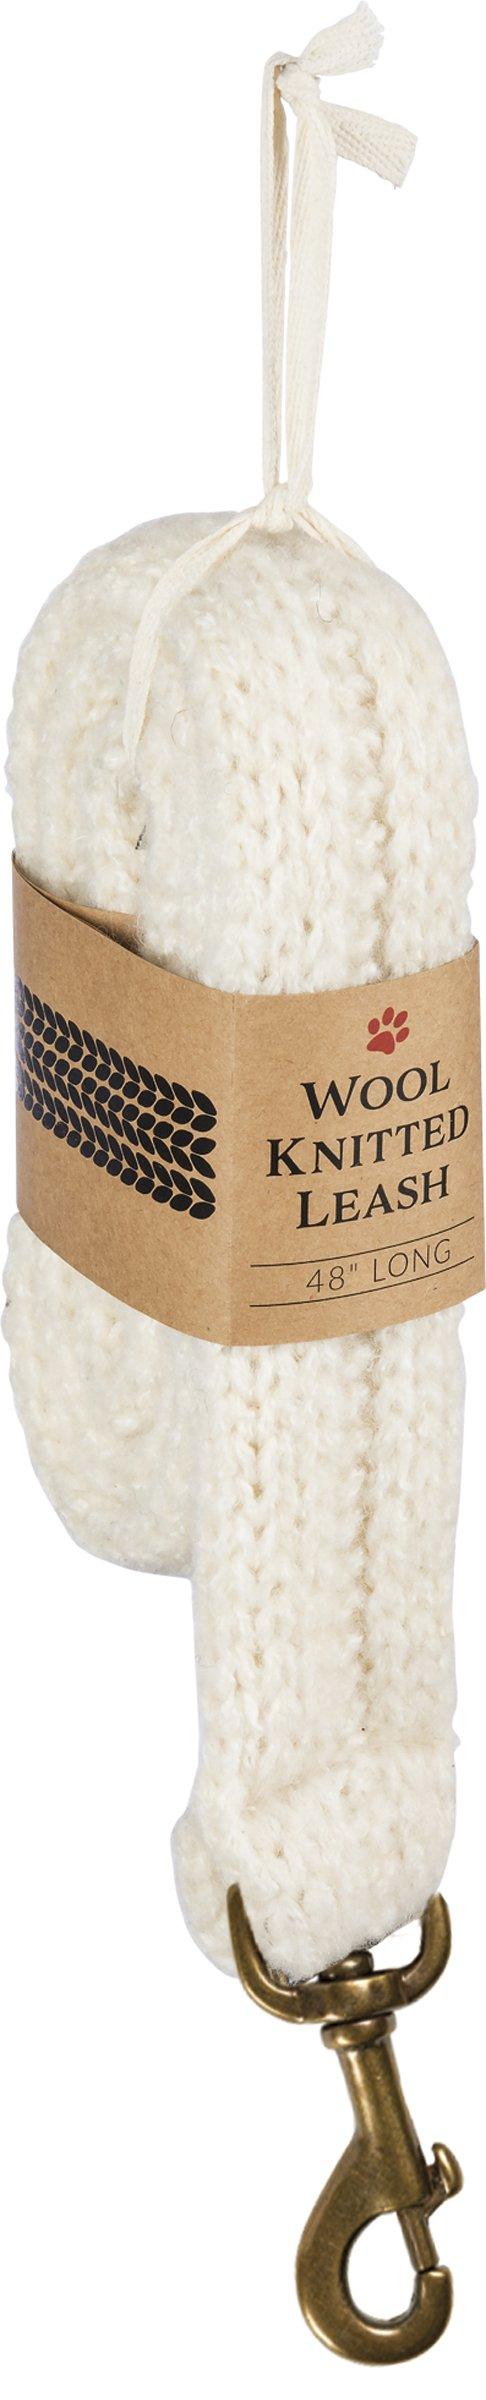 Wool Knitted Dog Leash